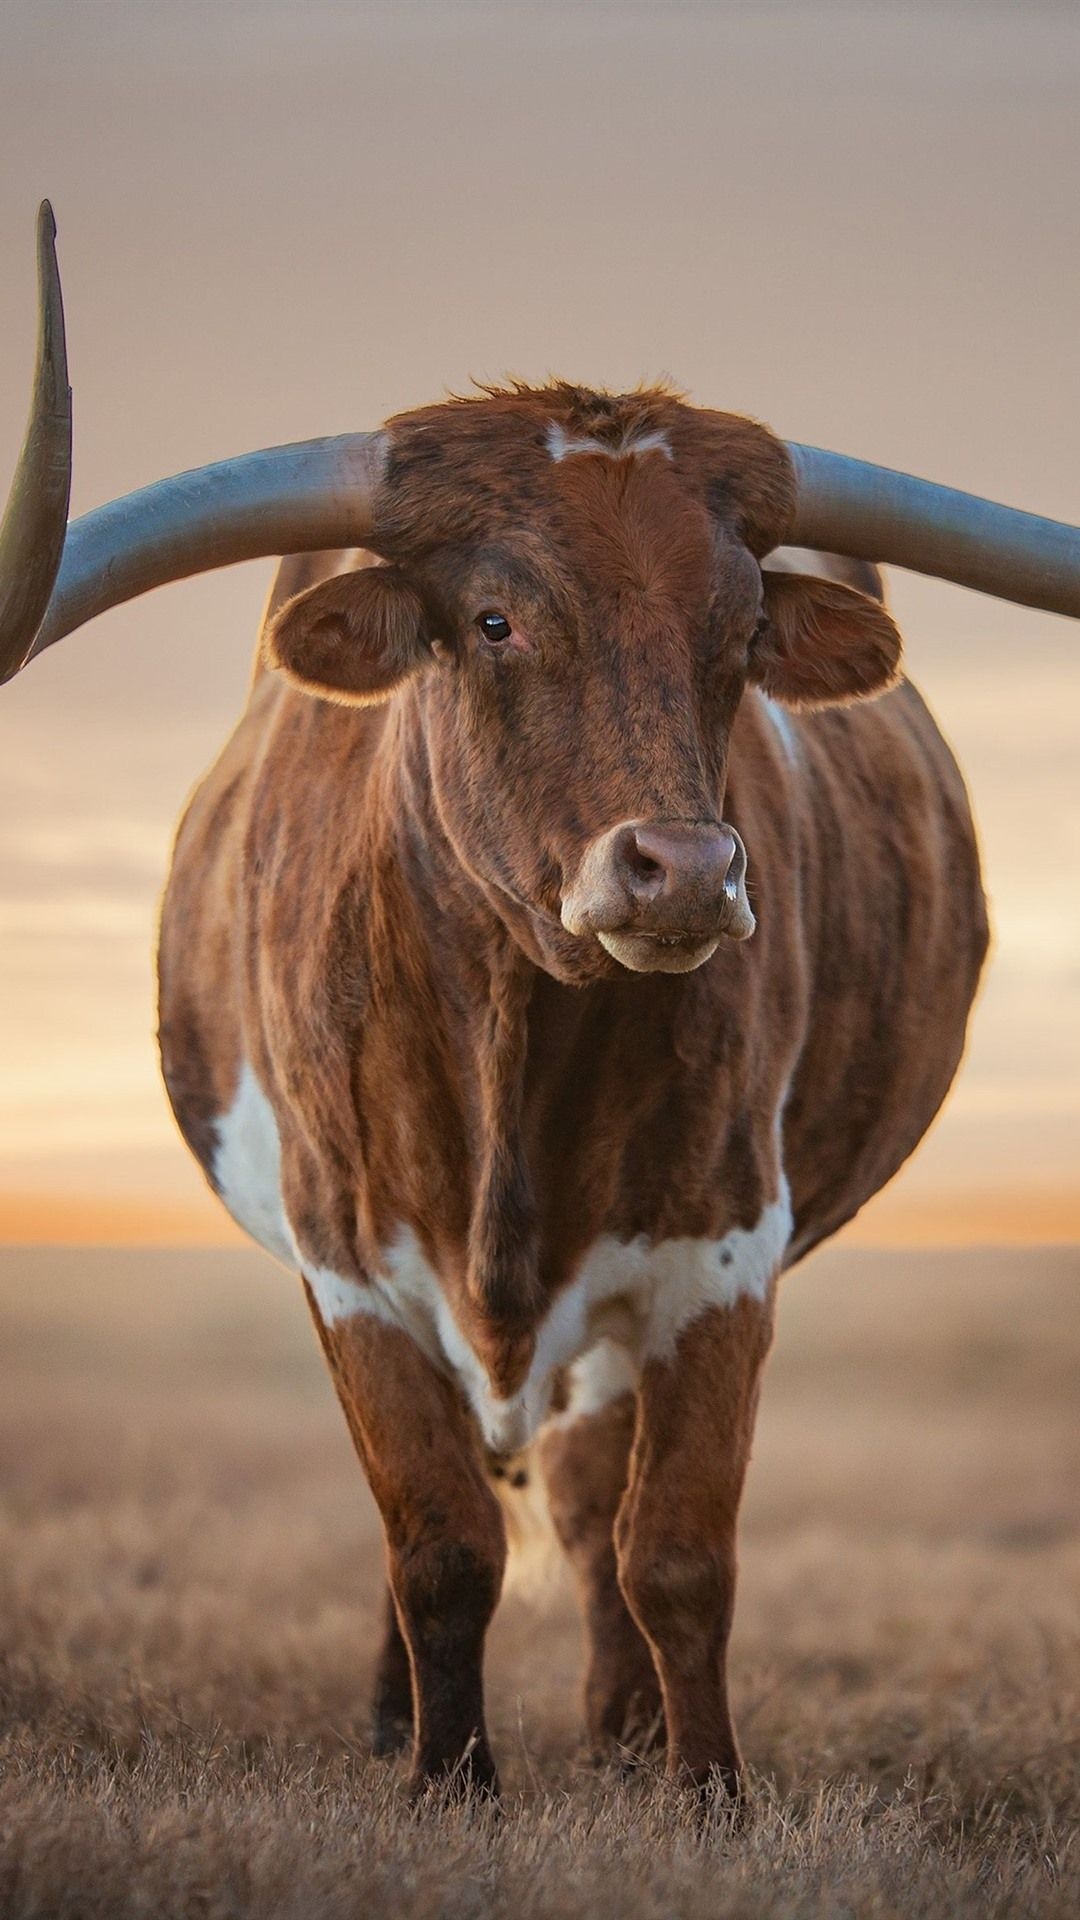 Sunset cow scene, Farm animal beauty, Rustic charm, Grazing peacefully, 1080x1920 Full HD Phone